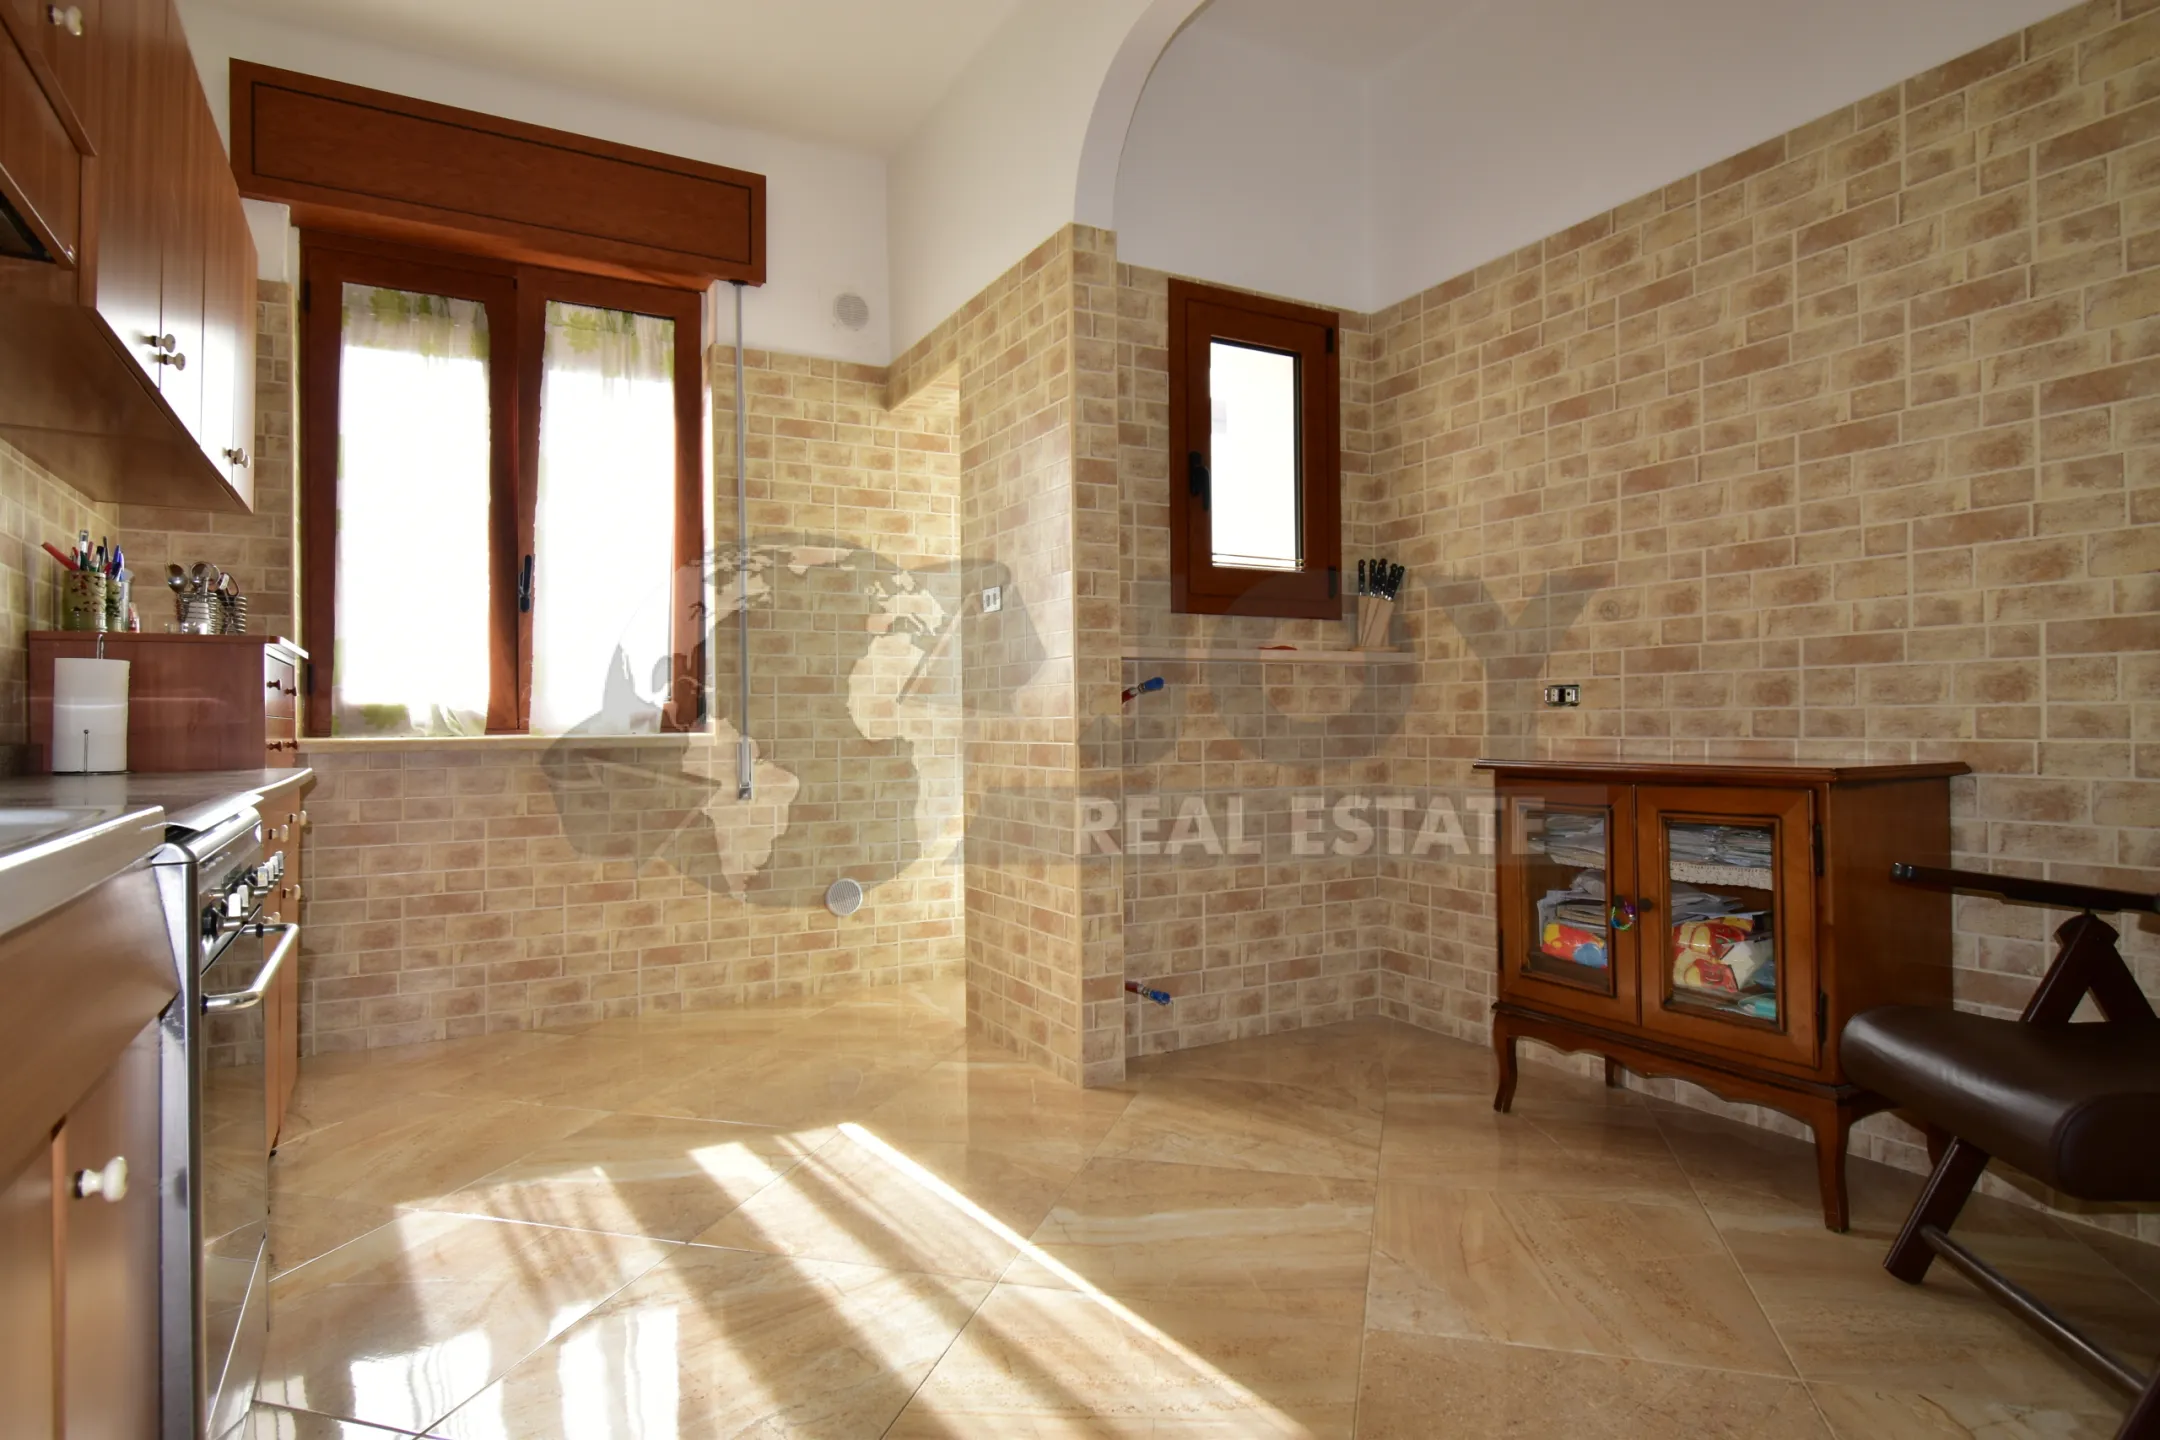 Immagine per Appartamento in vendita a Brindisi via Fanin 90b